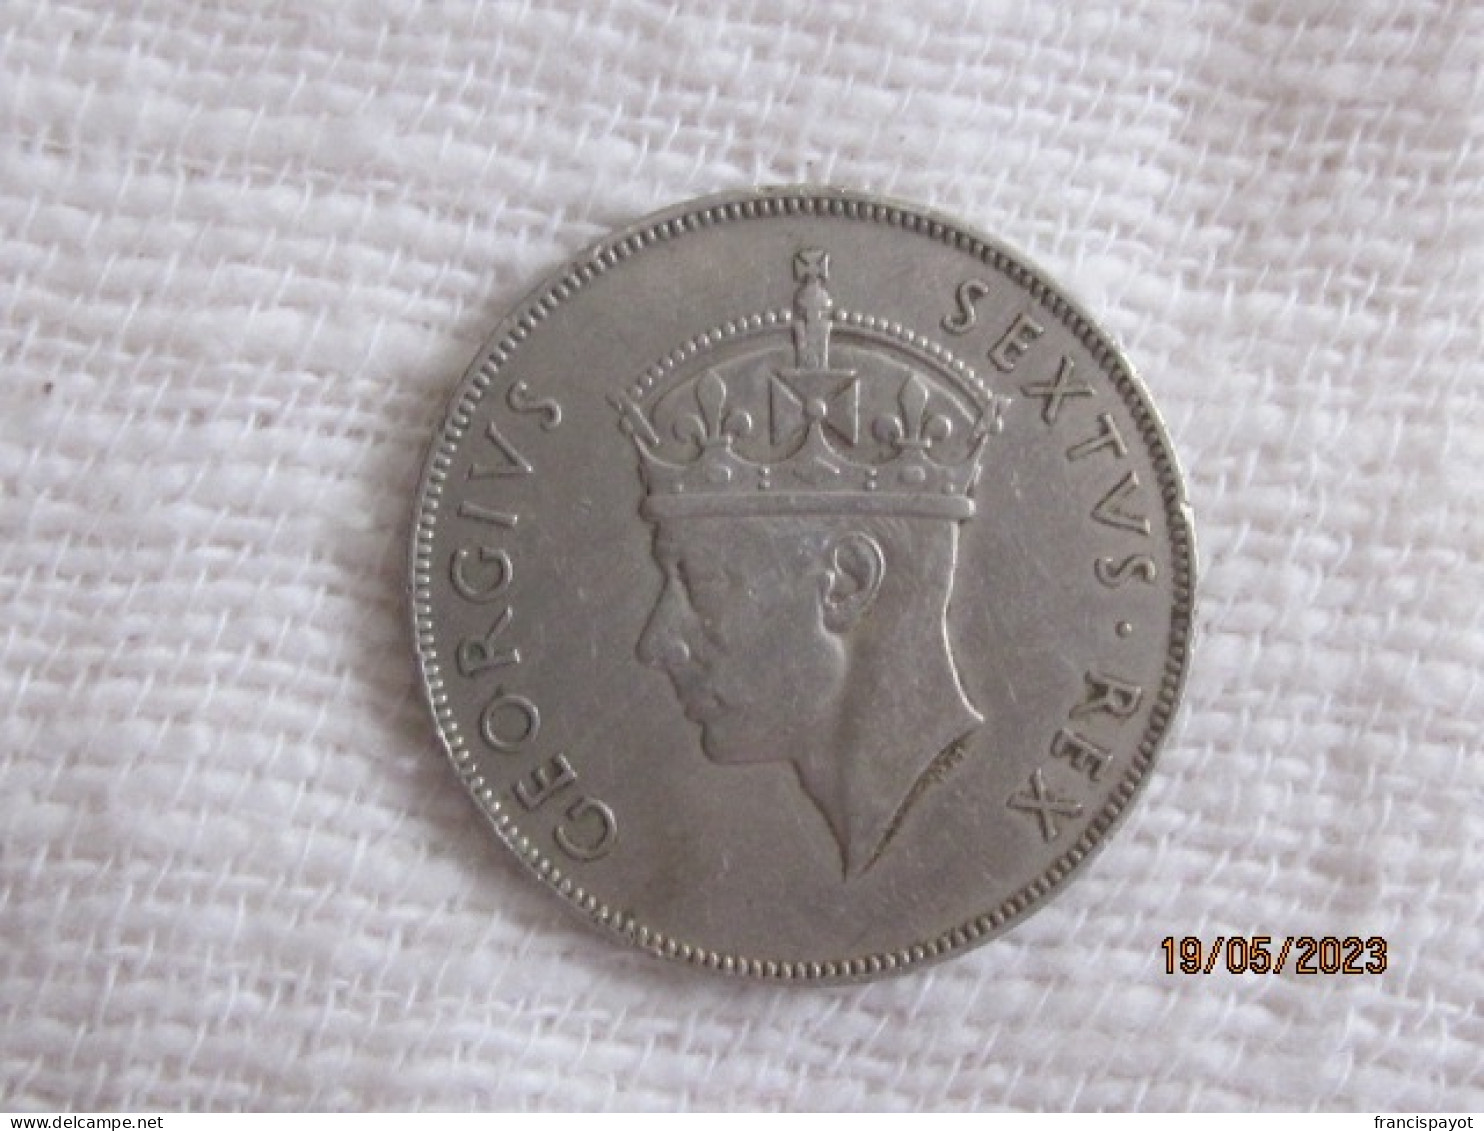 East Africa: 1 Shilling 1948 - Britse Kolonie